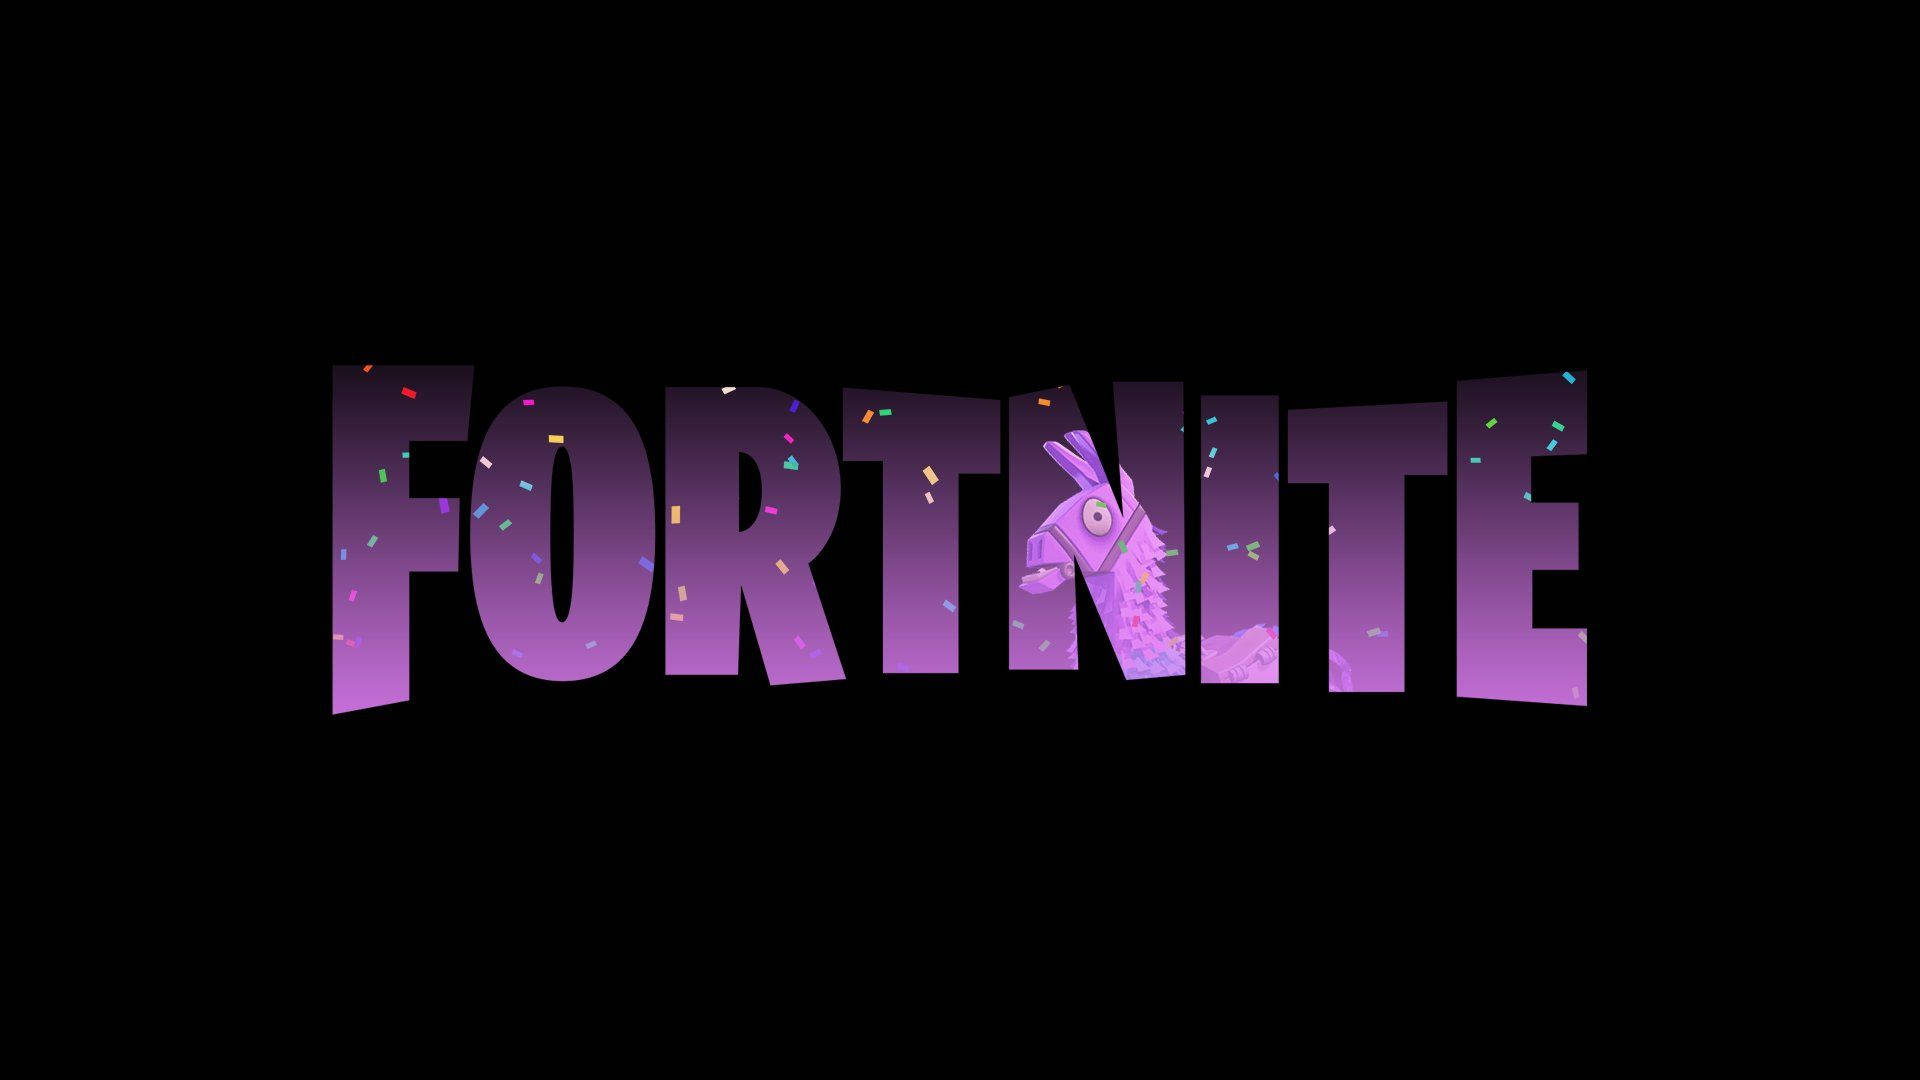 Cool Fortnite Logo Background Wallpaper